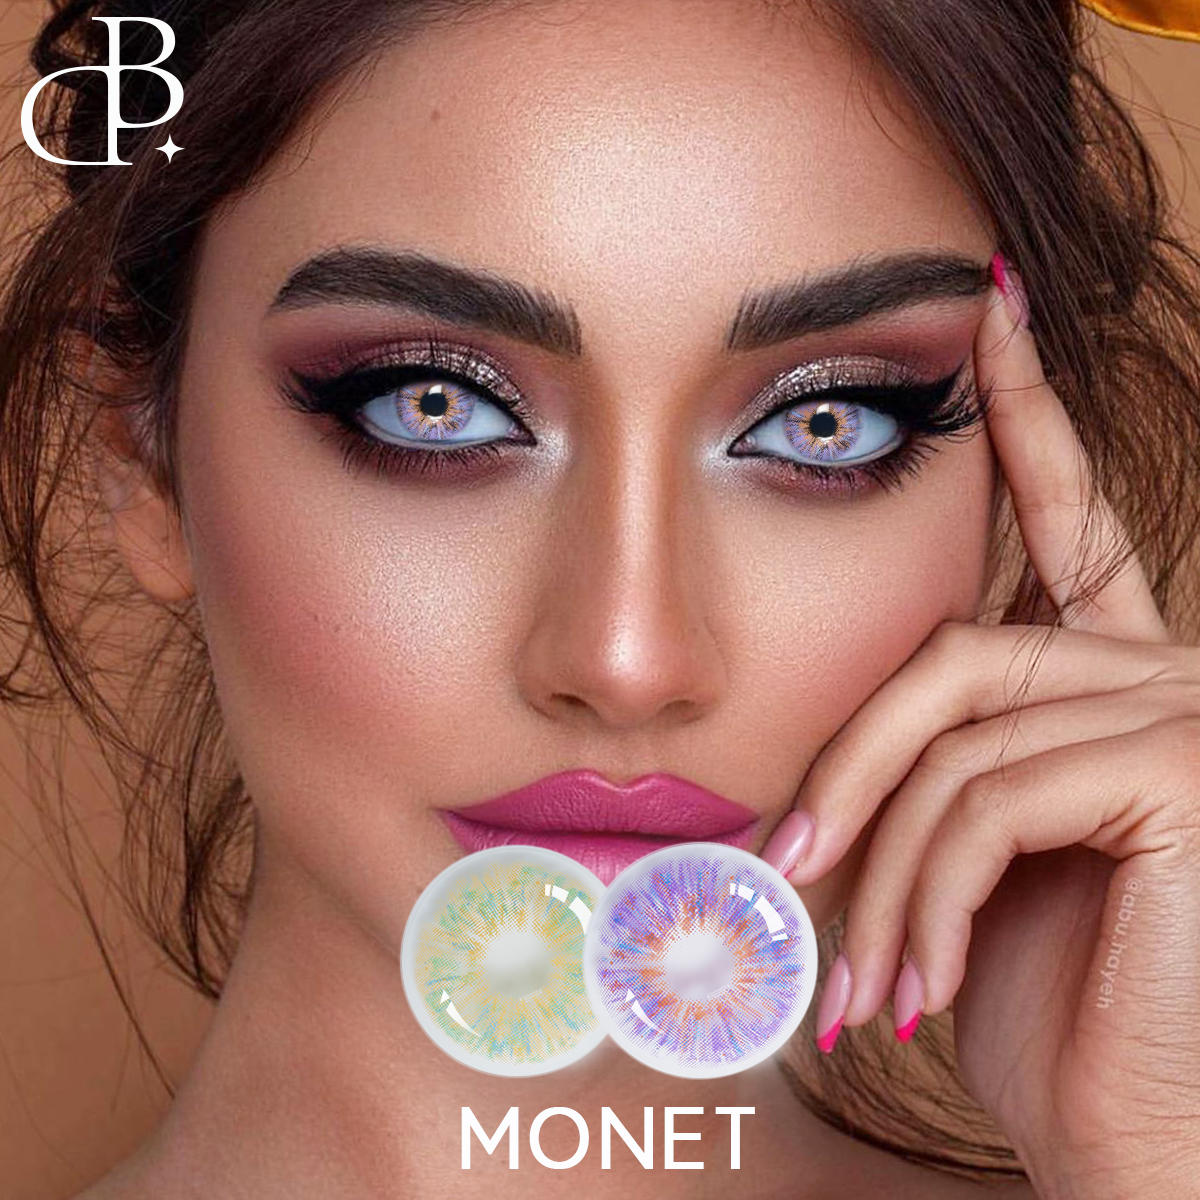 MONET Manufacturer Colored Lens Hotselling New Fashion girl FA 8 kontaktne leče naravne modre barve veleprodajne kontaktne leče